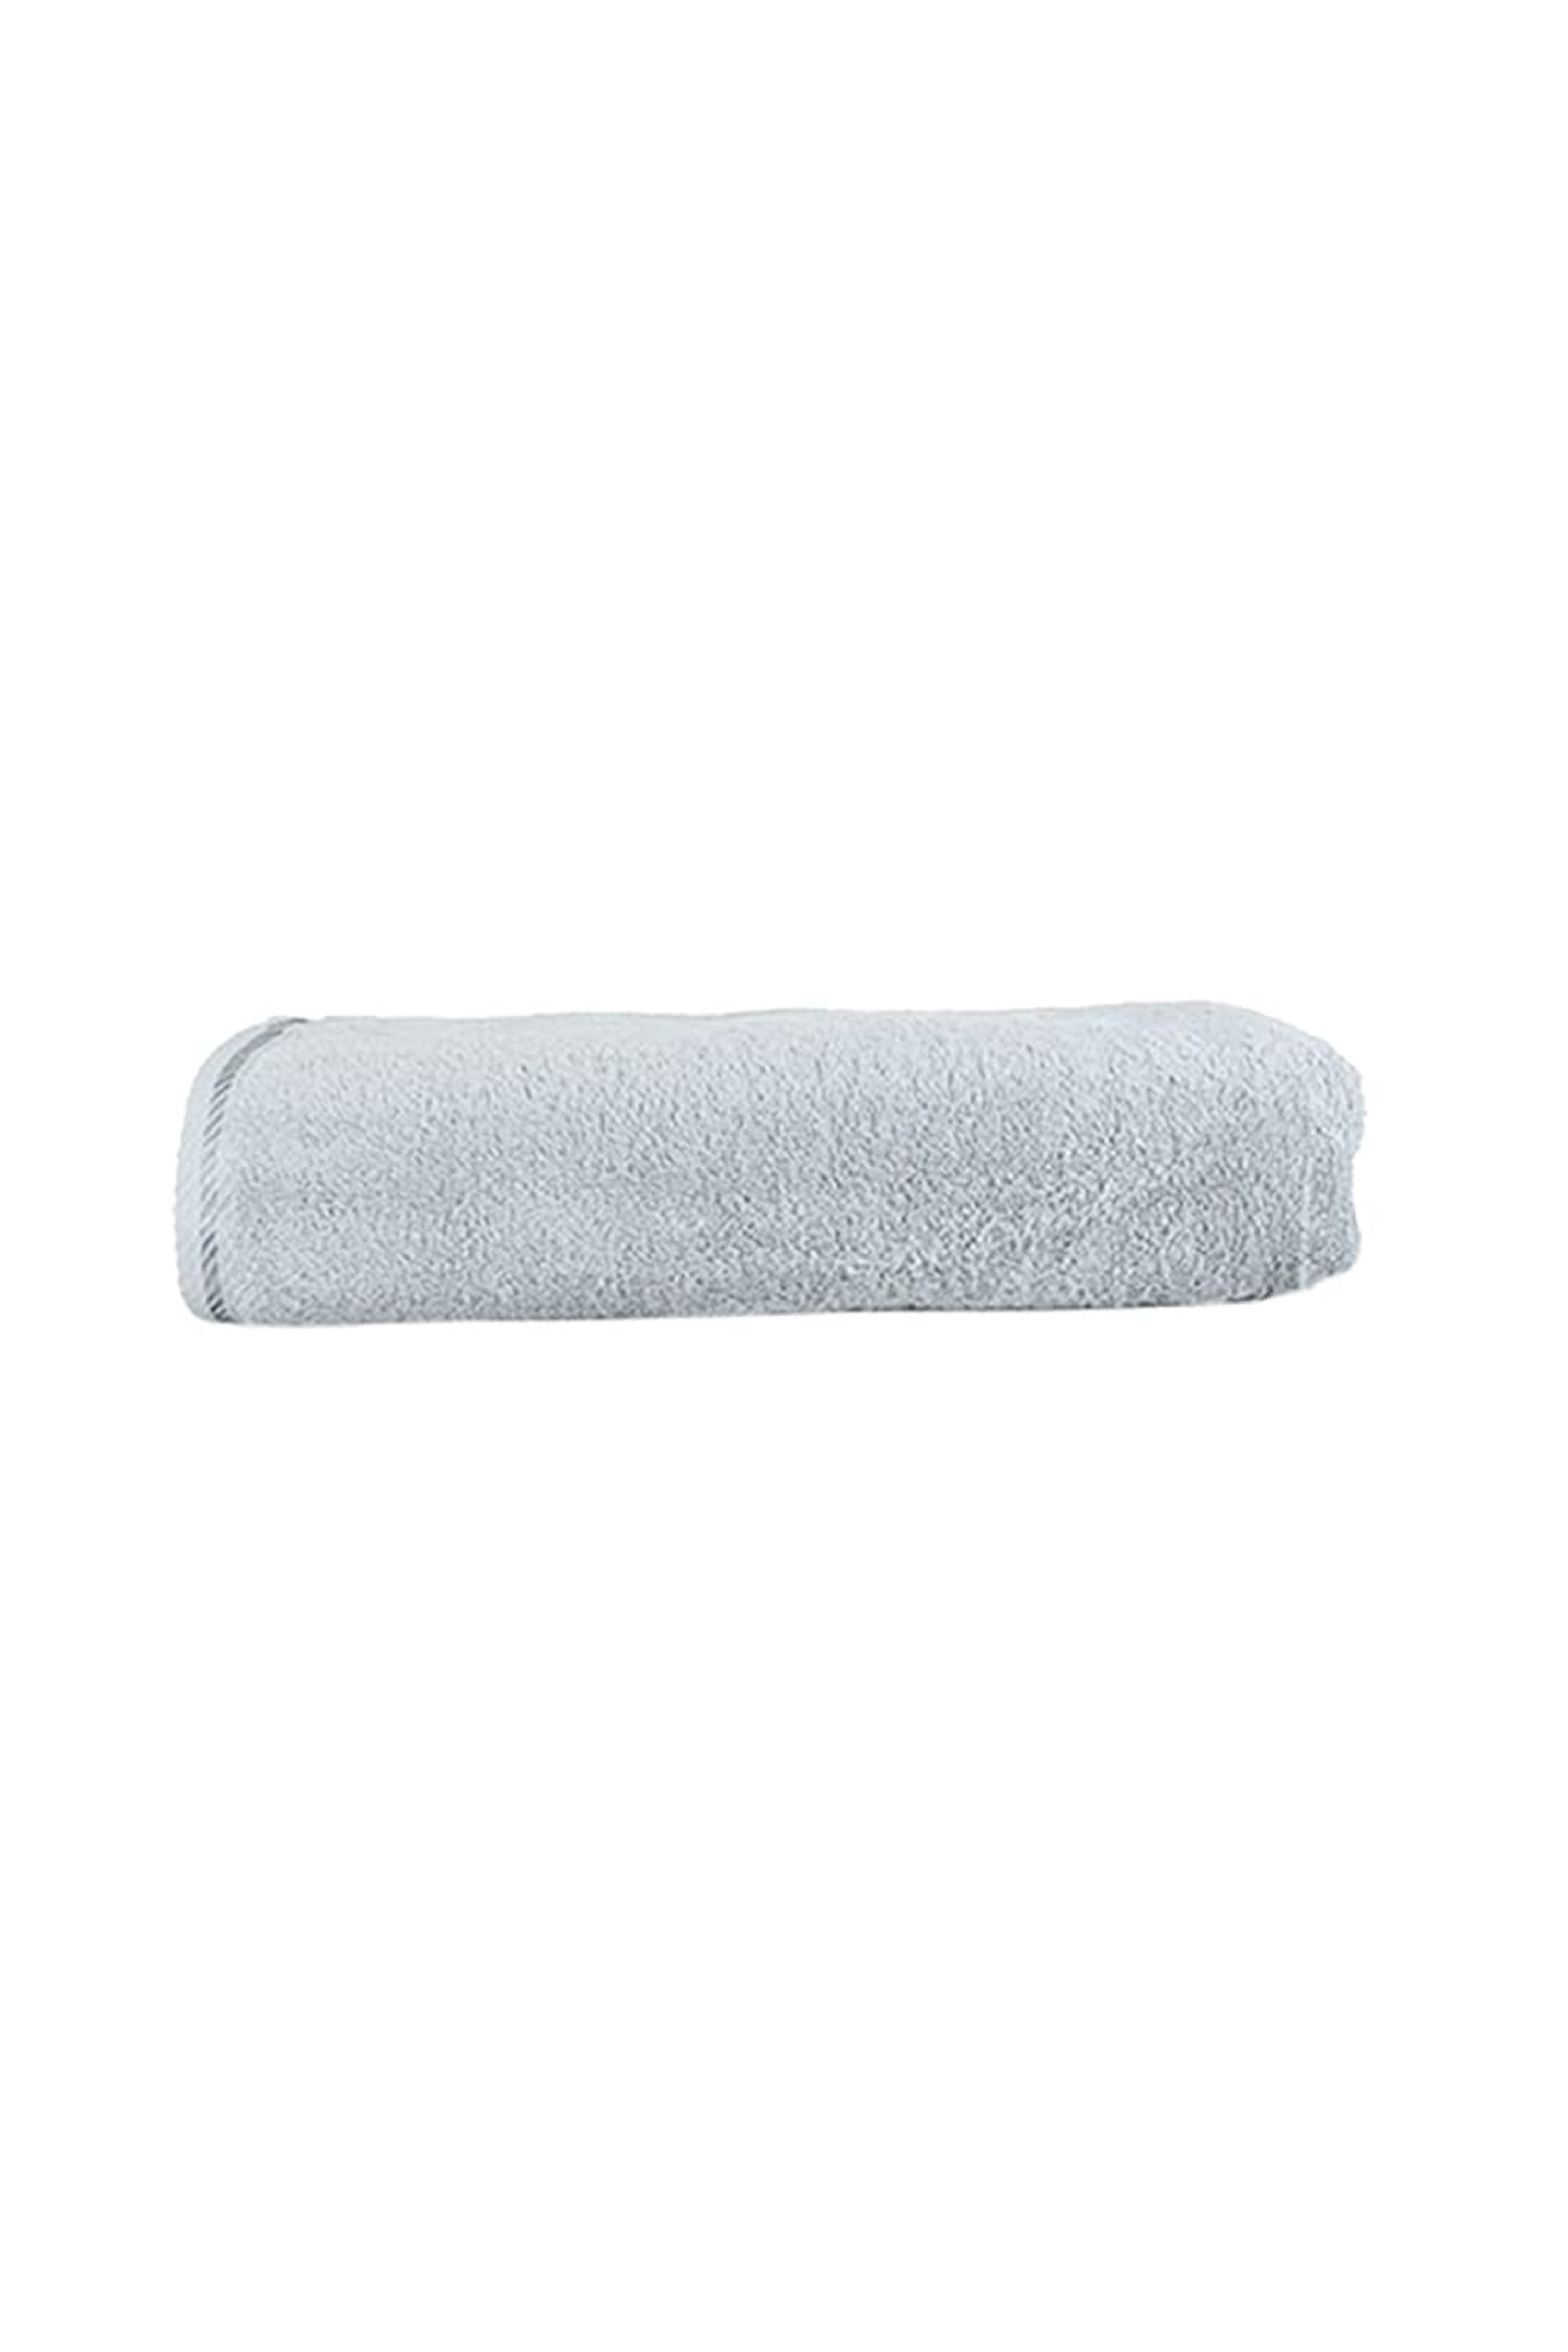 A&R TOWELS A&R TOWELS A&R TOWELS ULTRA SOFT BATH TOWEL (LIGHT GREY) (ONE SIZE)